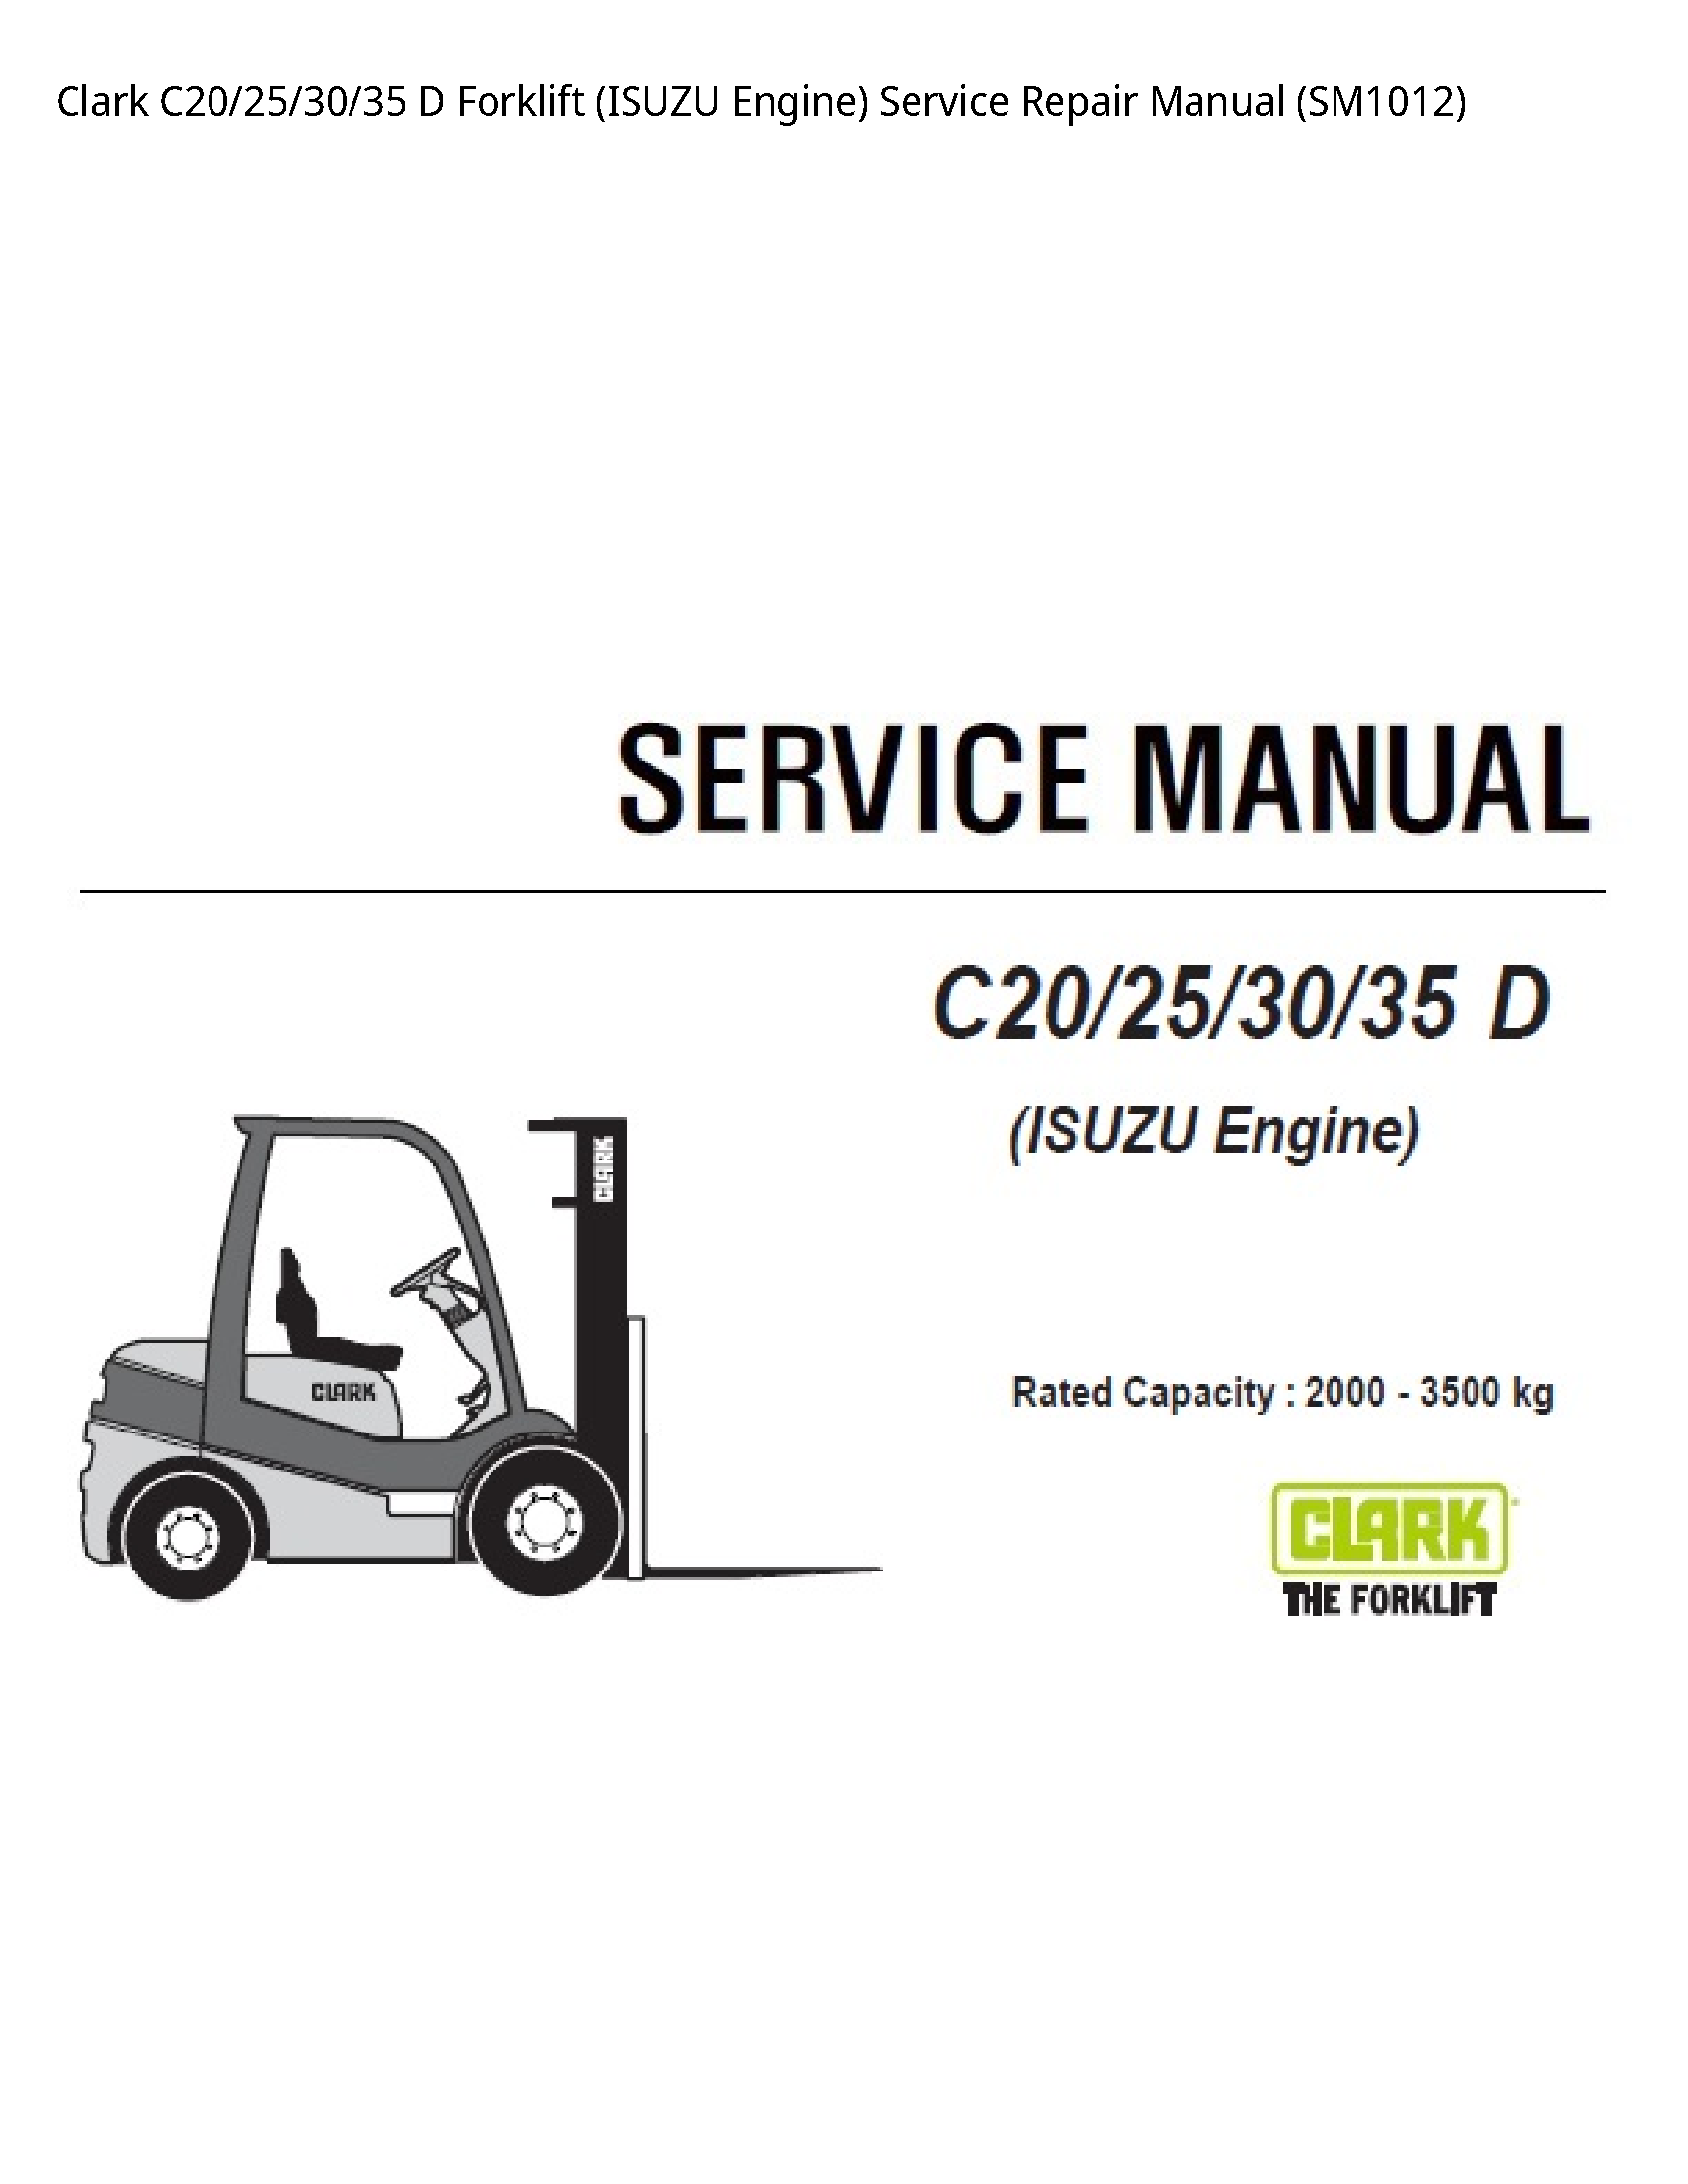 Clark C20 Forklift (ISUZU Engine) manual